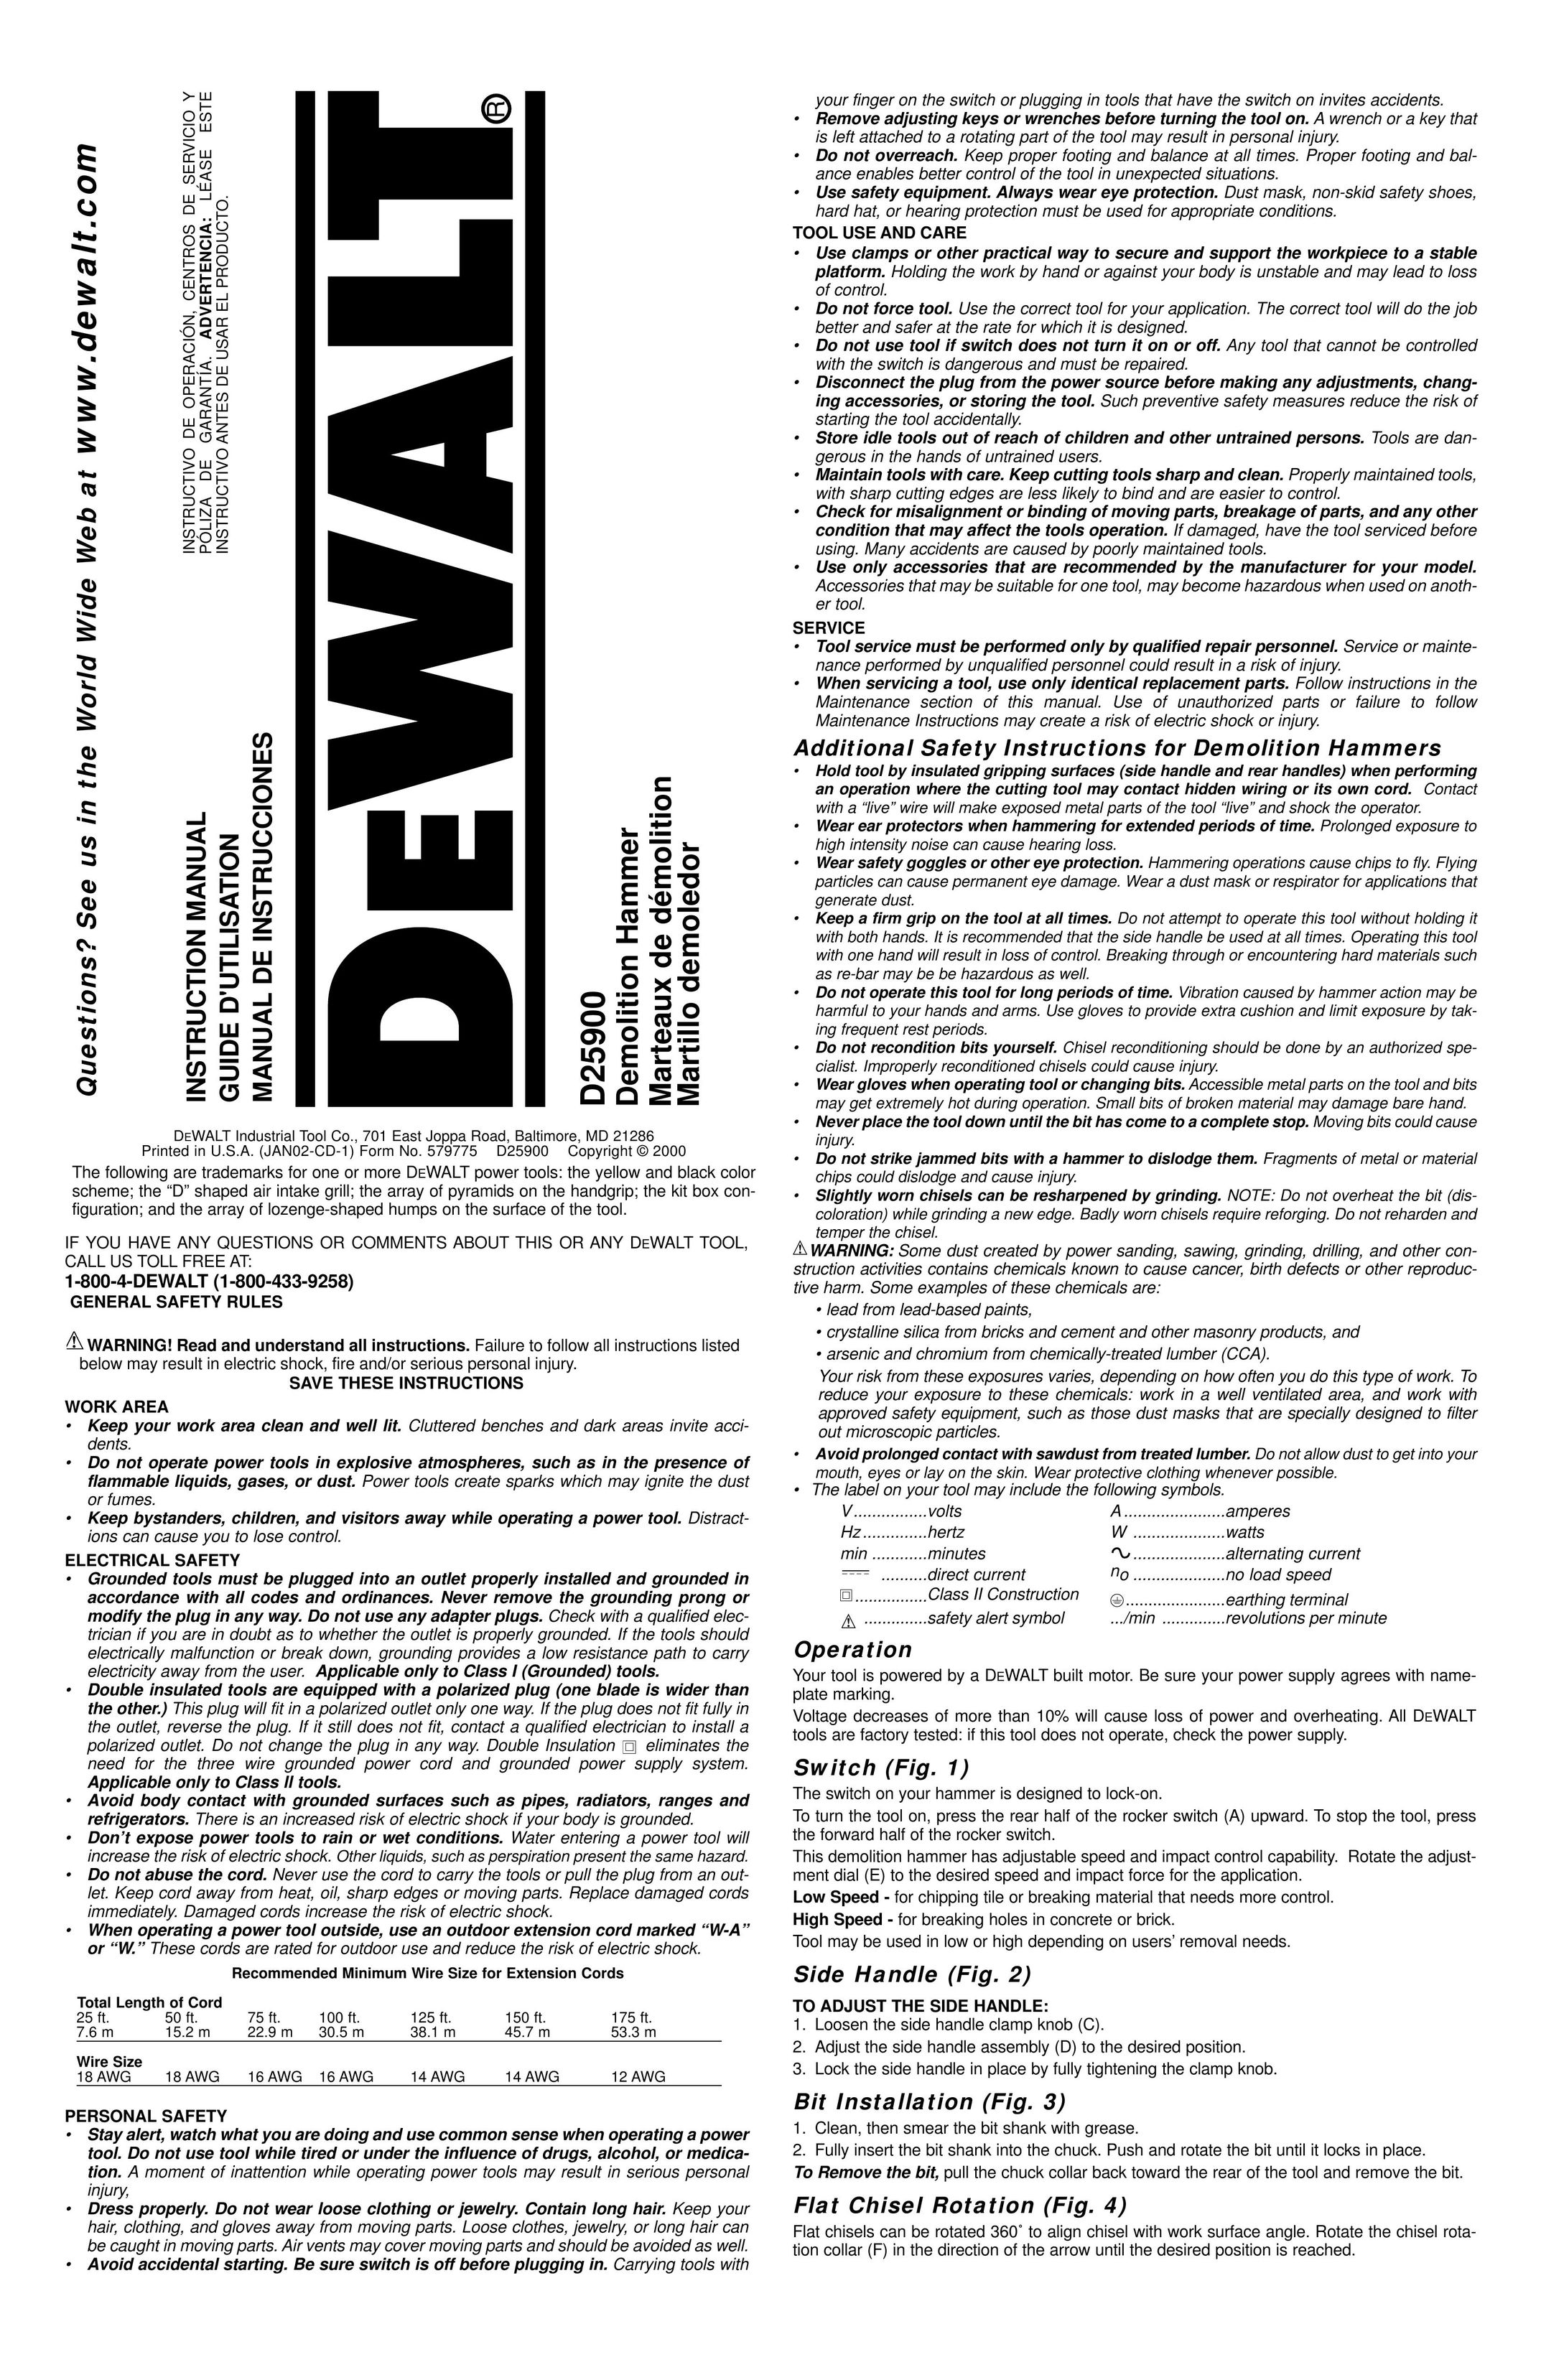 DeWalt D25900K Power Hammer User Manual